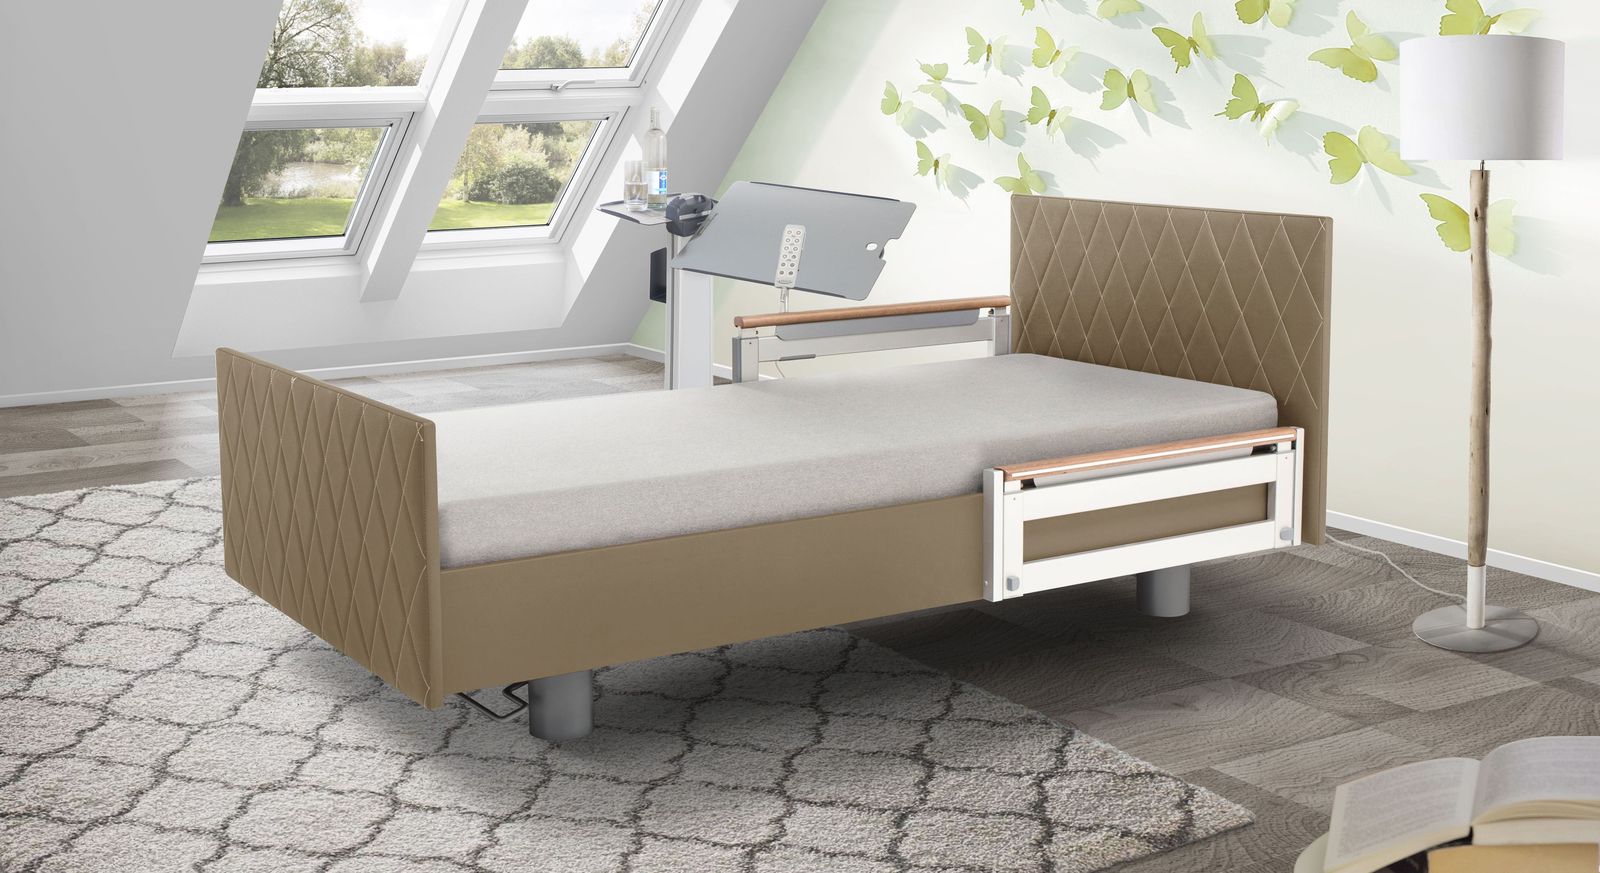 Komfortbett mit Pflegebett-Funktion Borkum mit taupefarbenem Kunstlederbezug